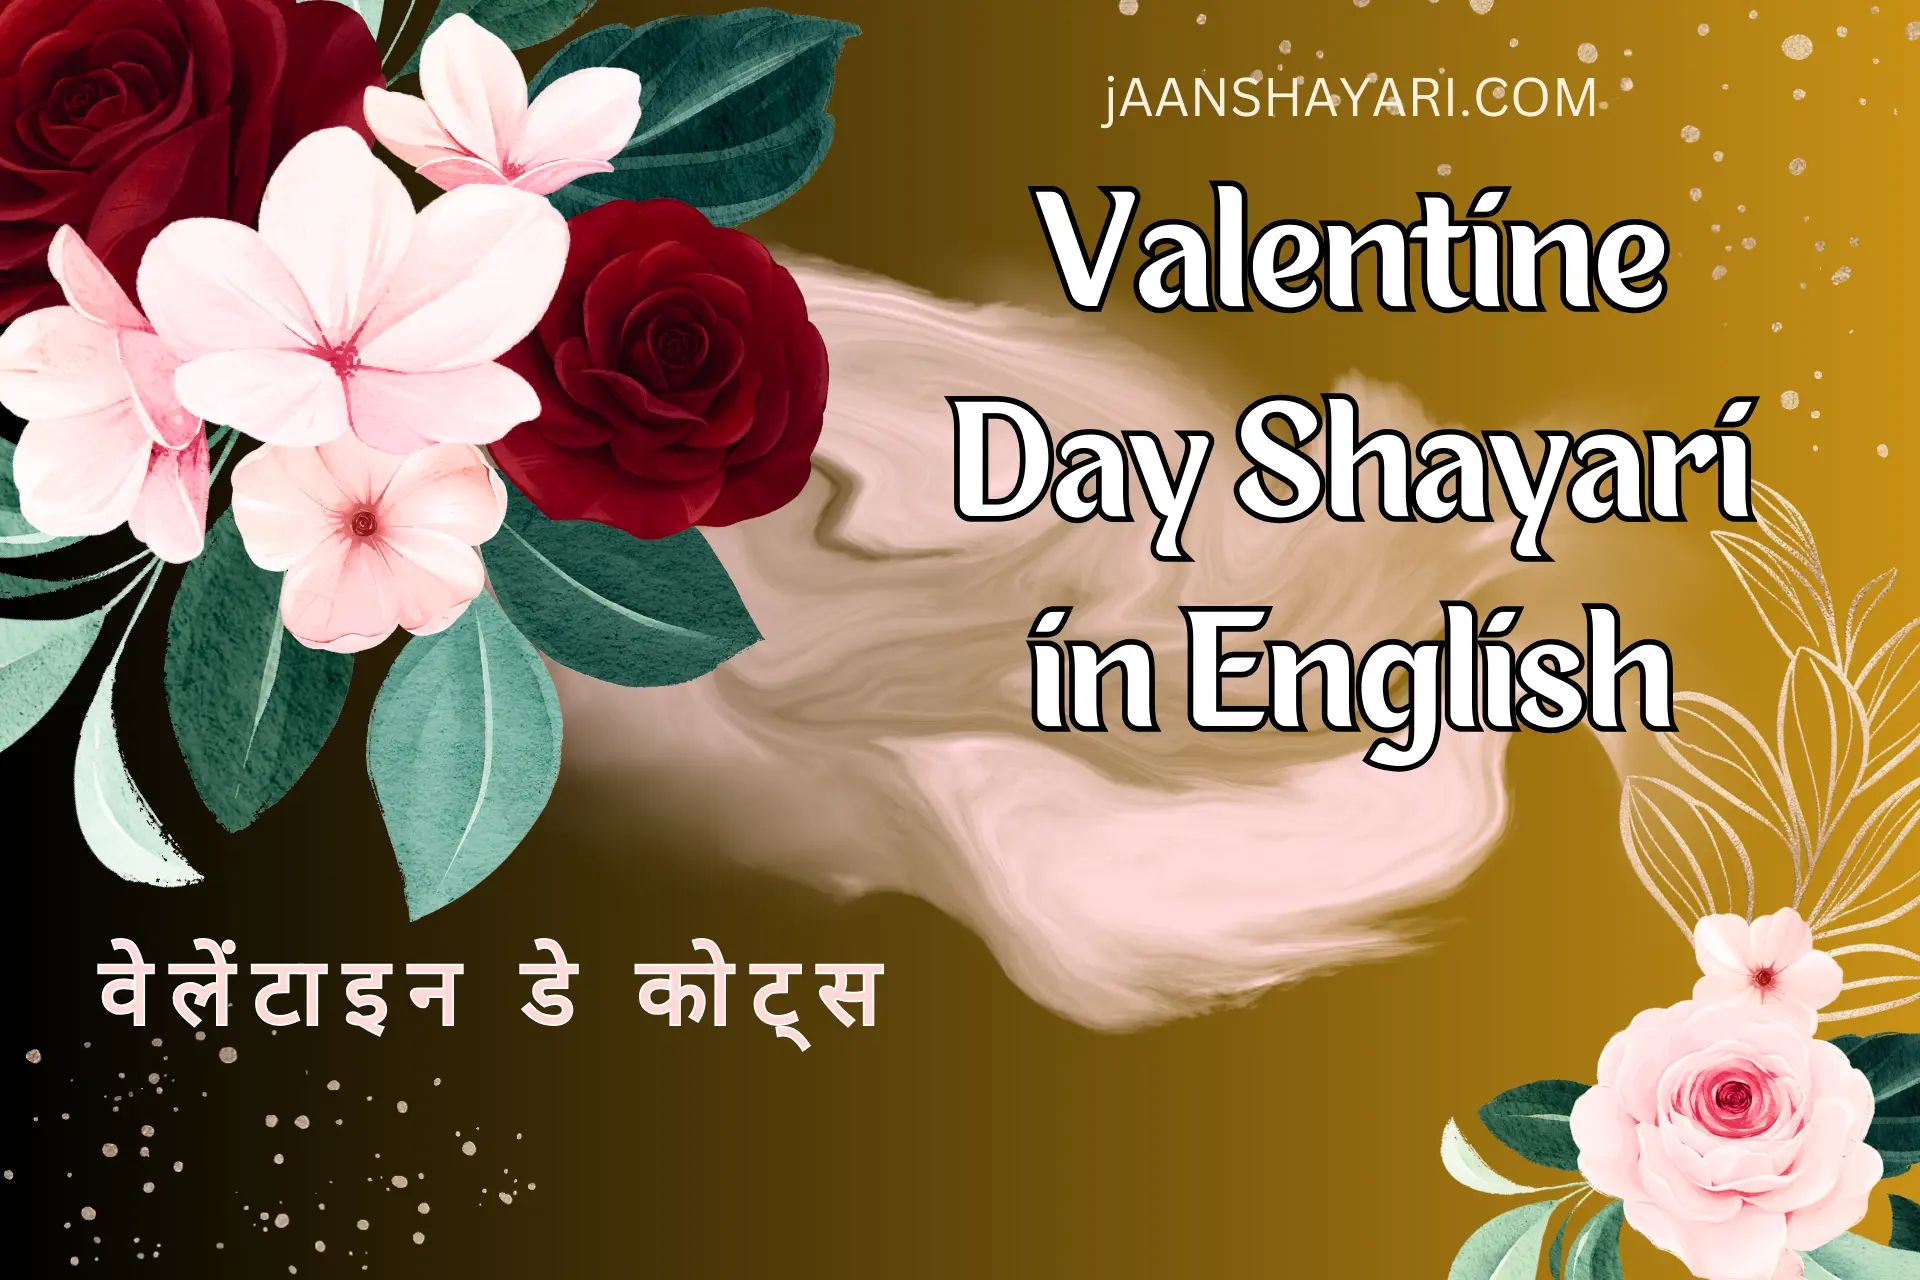 happy valentine day my love shayari, valentine day ke liye shayari, valentine day par shayari, valentine day shayari english, valentine day shayari in english, valentine sad shayari, valentine shayari in english, valentine’s day shayari hindi, valentine’s day shayari in english